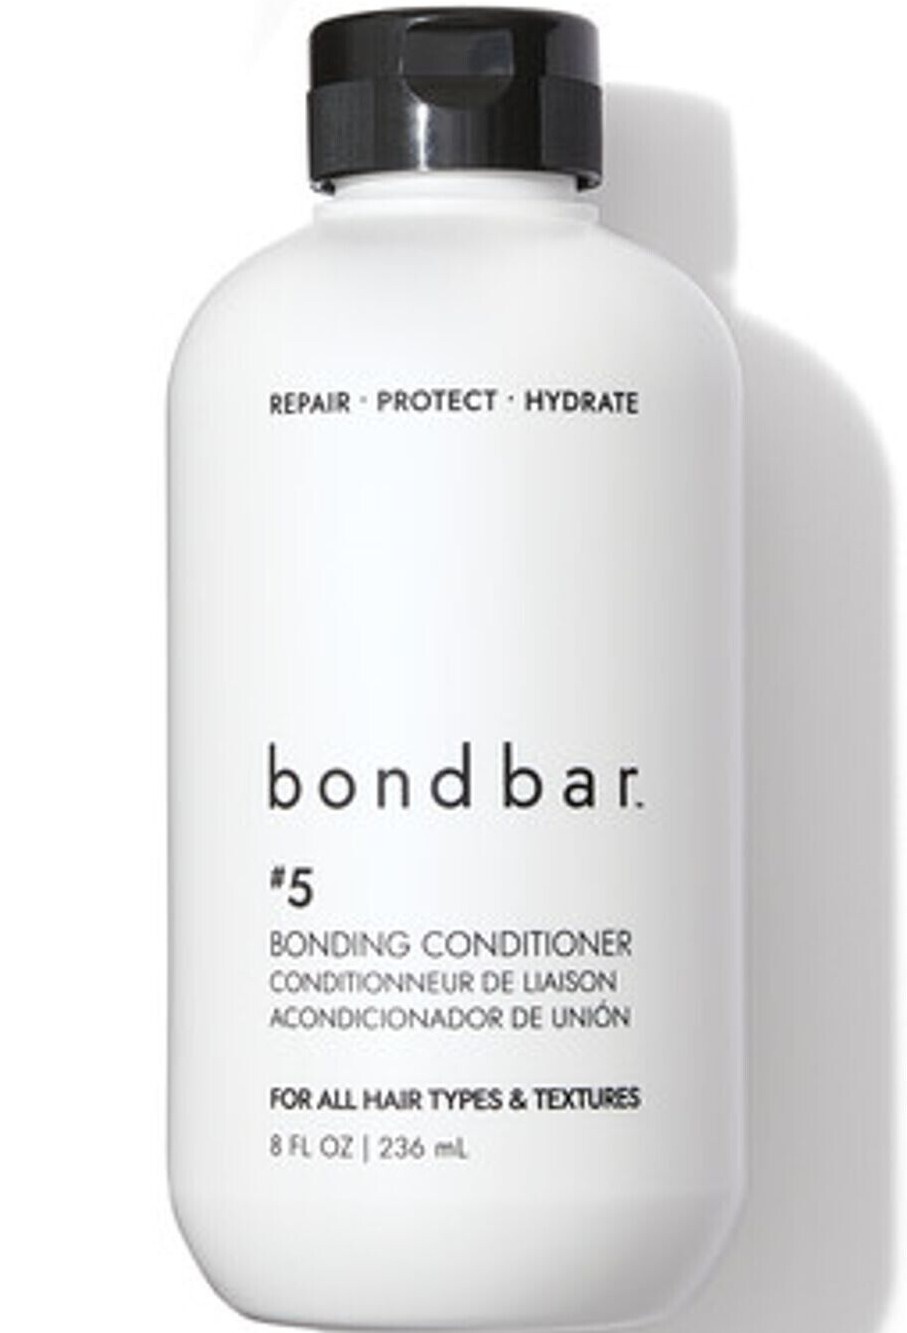 Bond bar #5 Bonding Conditioner